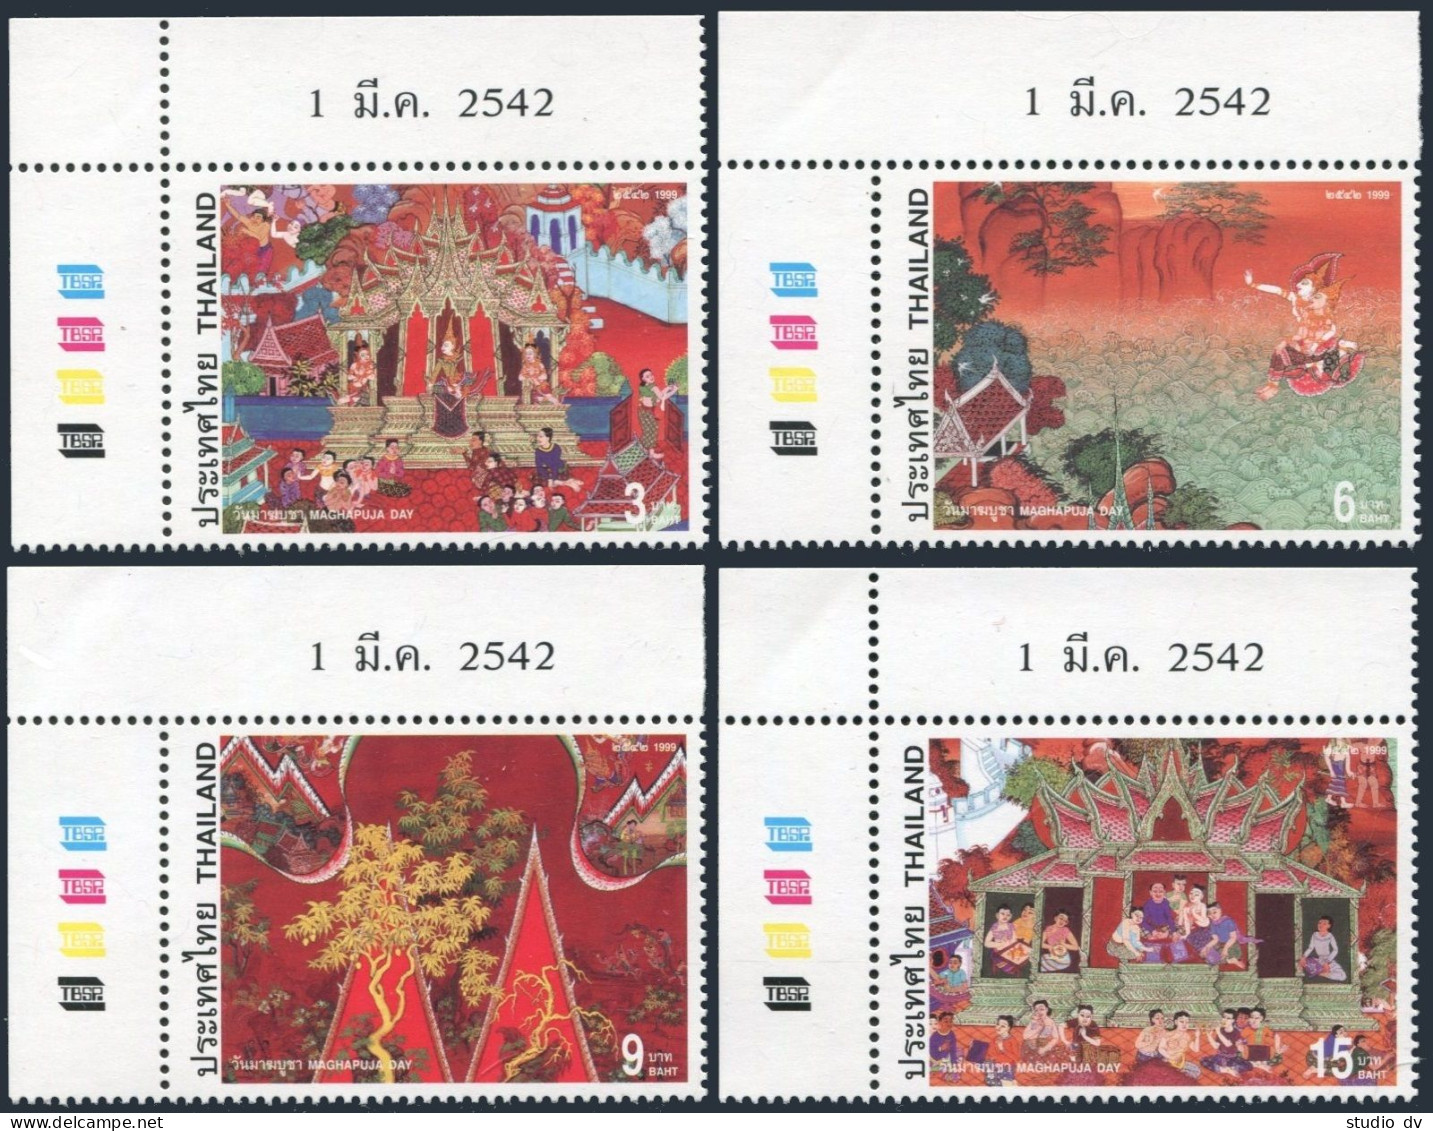 Thailand 1856-1859,1859a Sheet,MNH. Buddhist Holiday Maghapuja Day,1999. - Thailand